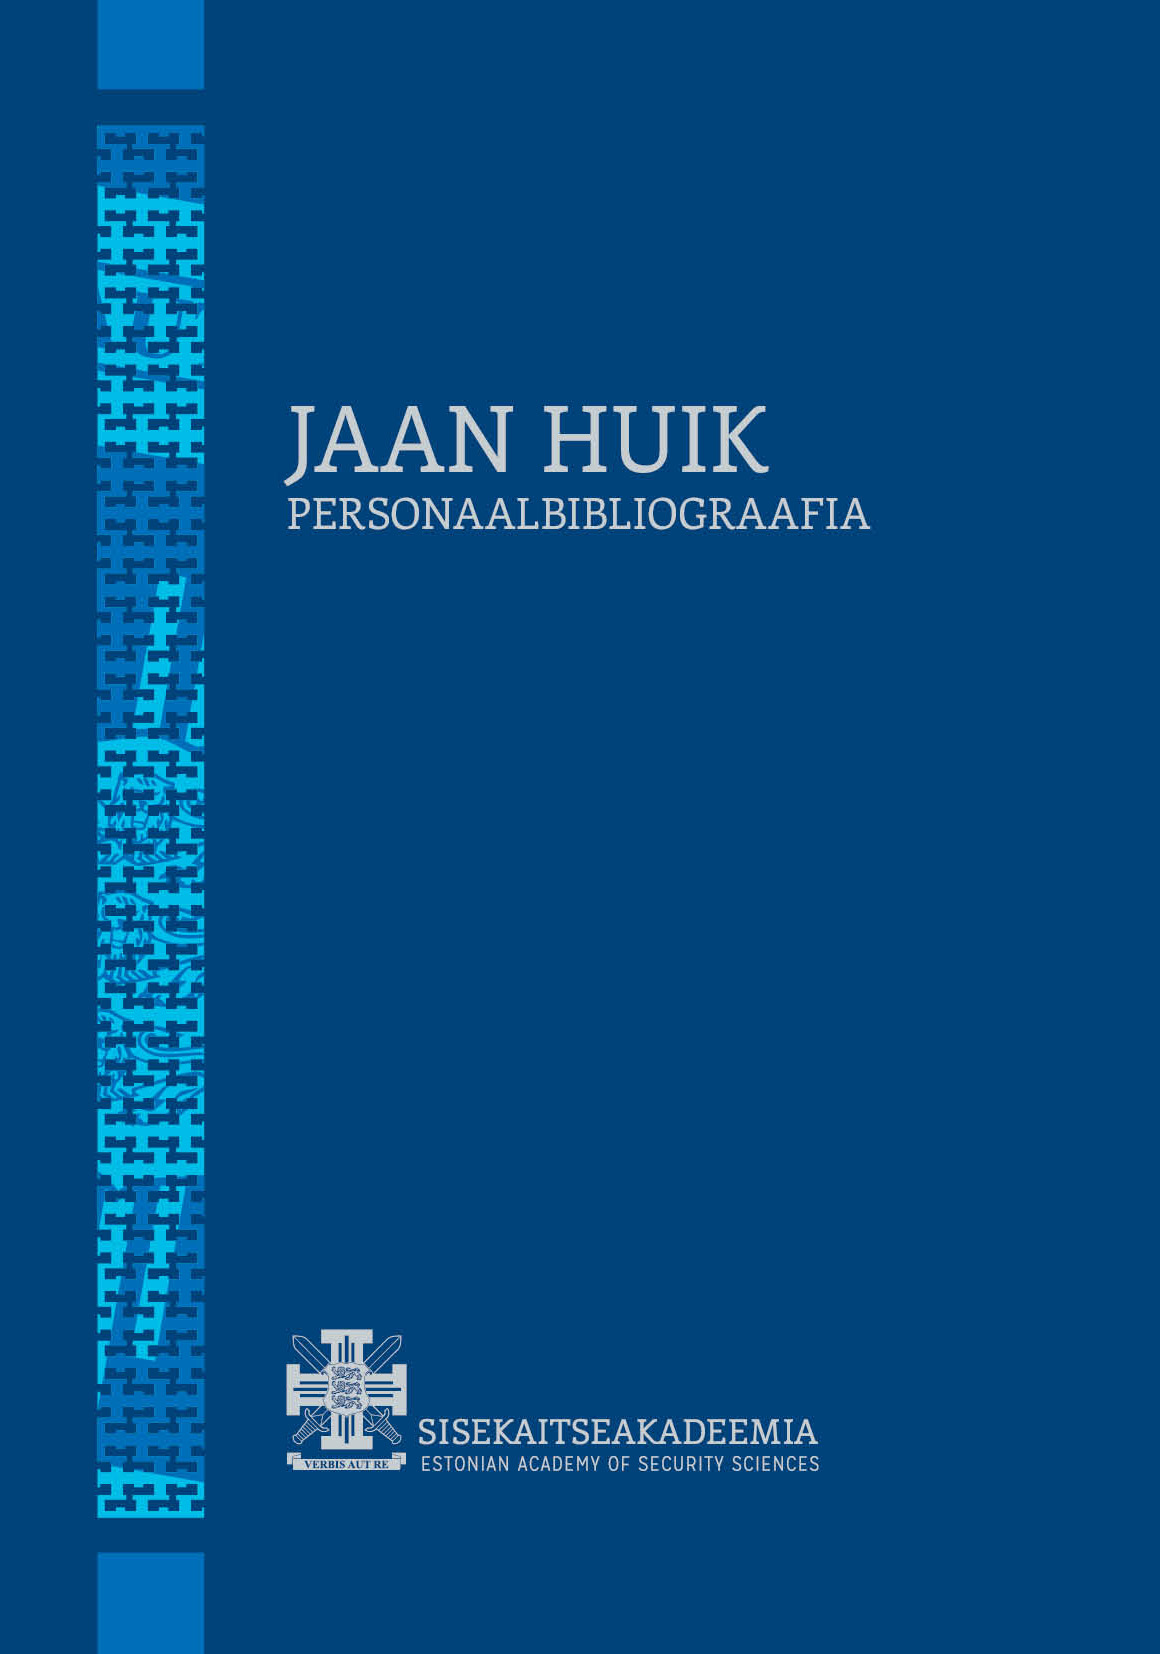 Jaan Huik bibli